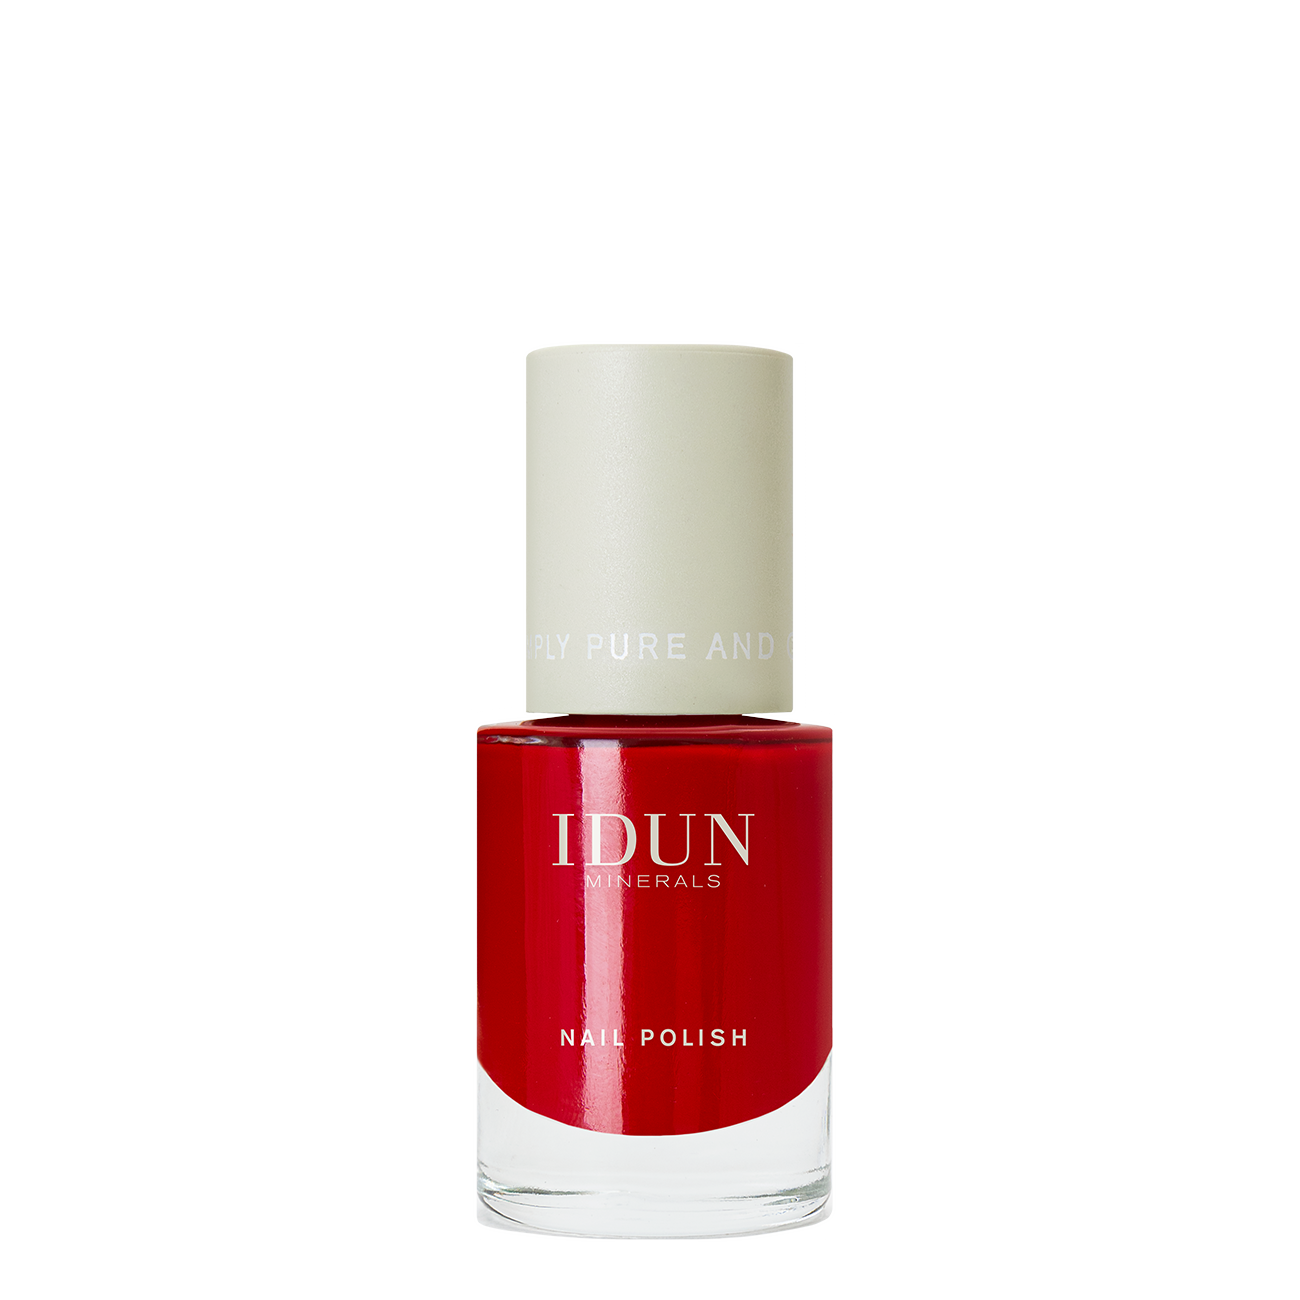 Se IDUN Minerals - Nailpolish Rubin - 11 ml hos Duft og Natur